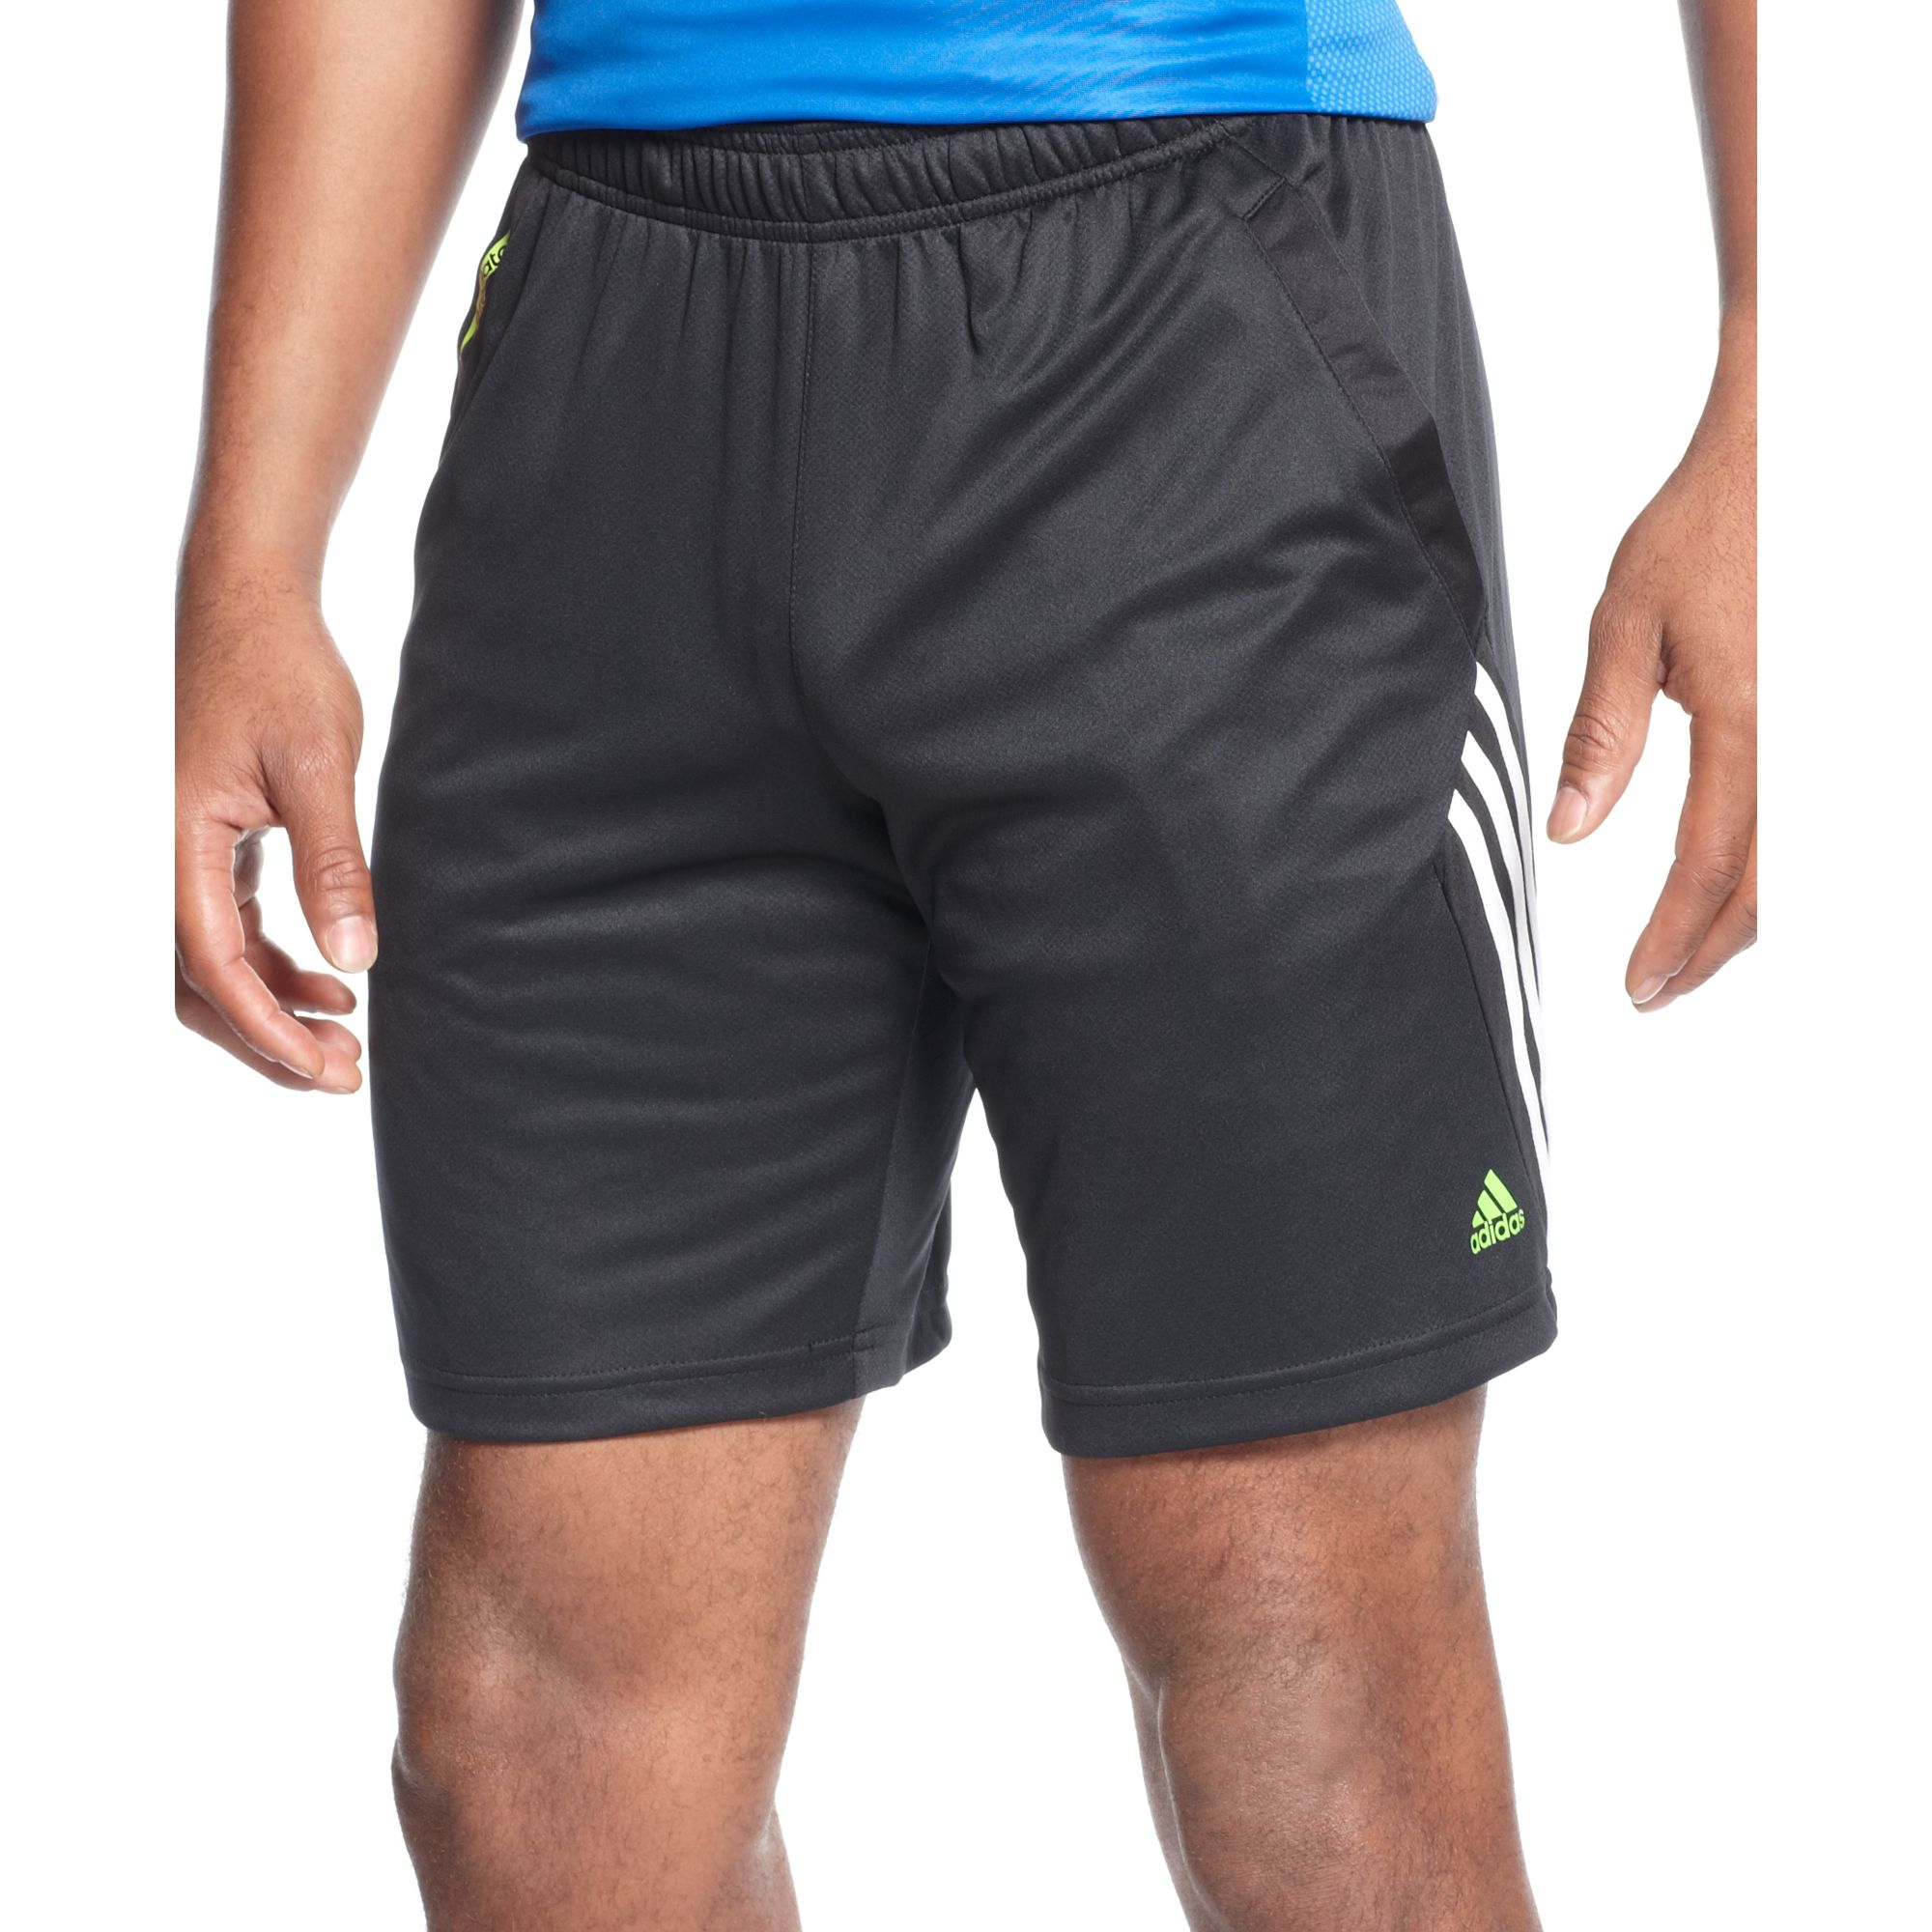 Lyst - Adidas Predator Training Shorts in Black for Men